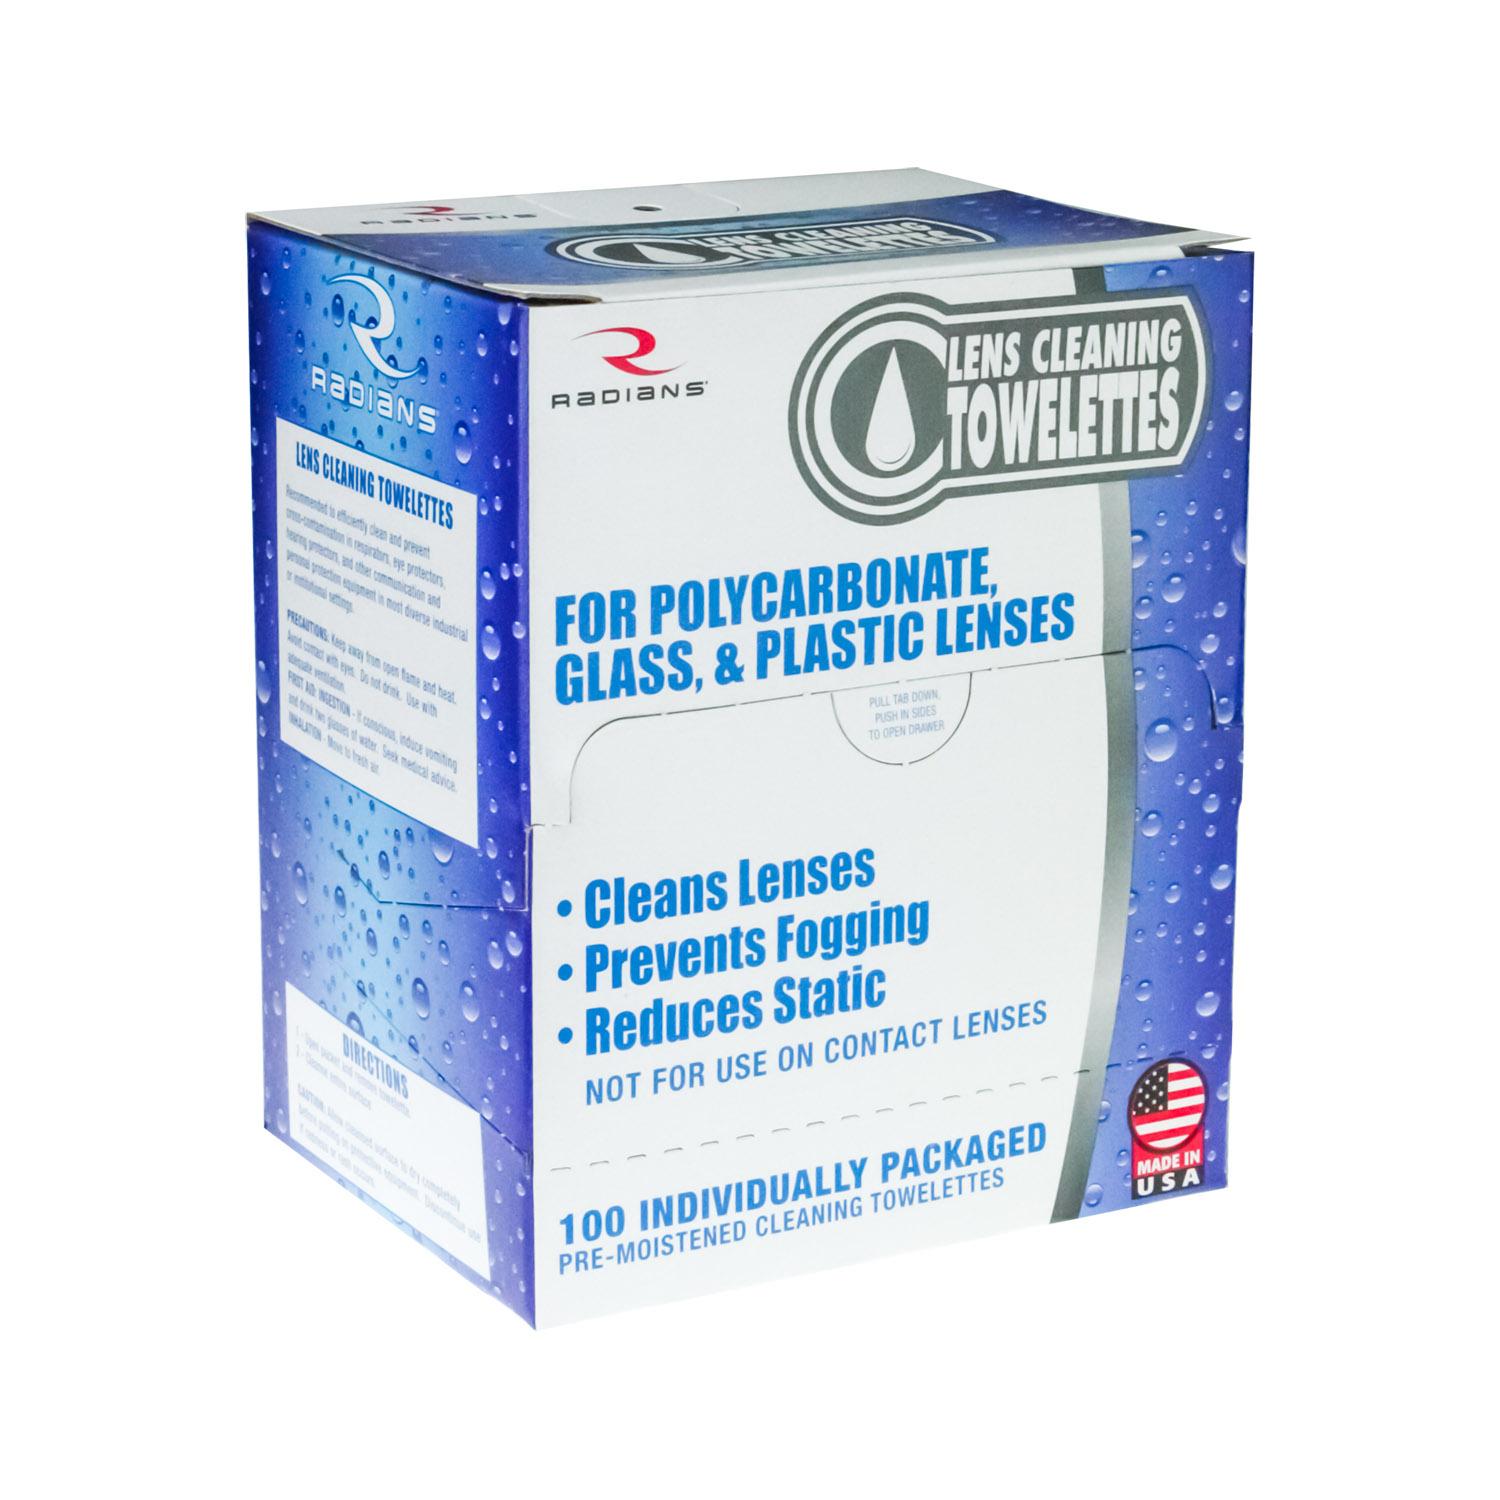 For Polycarbonate, Glass & Plastic Lenses